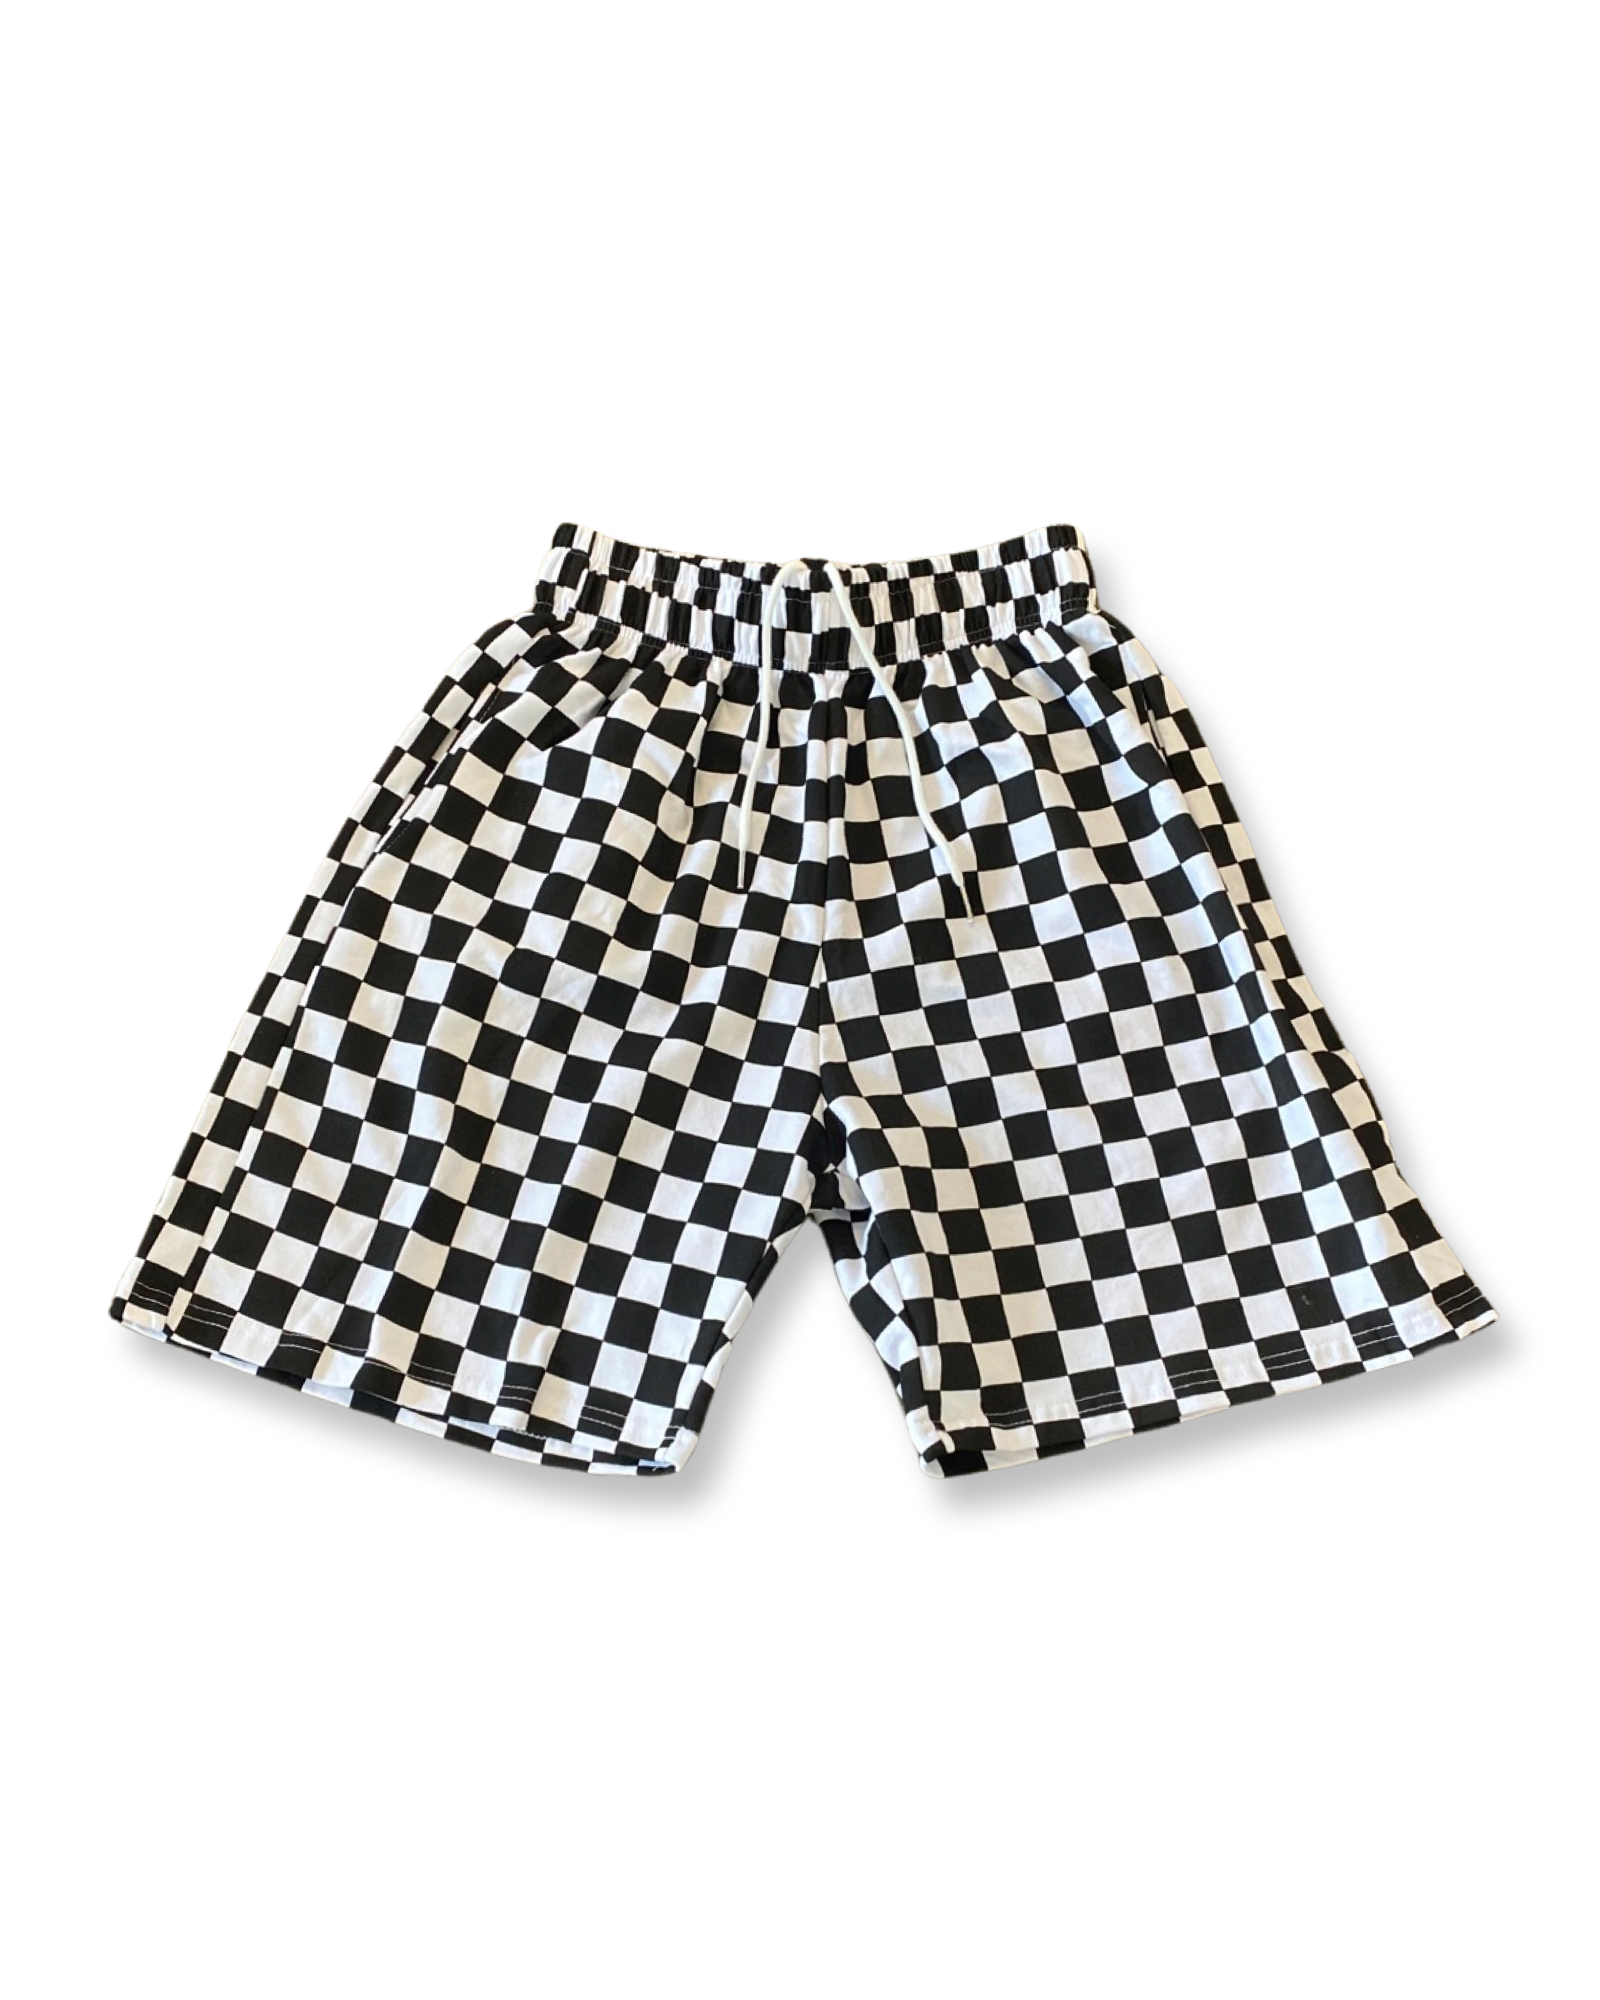 Unisex Checkered Shorts